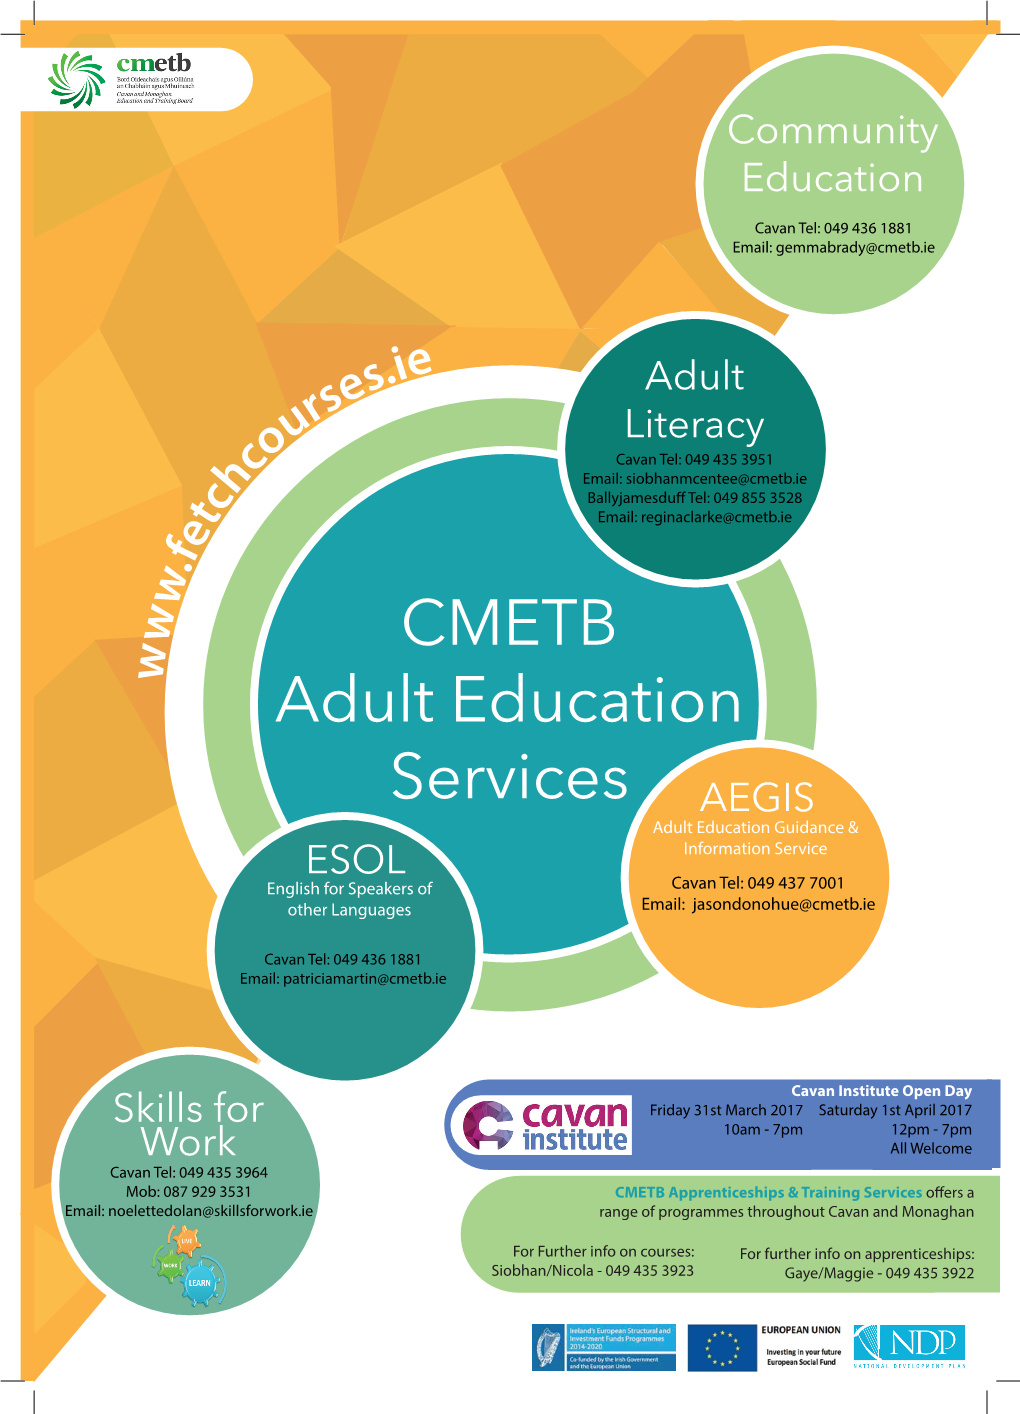 CMETB Adult Education Services